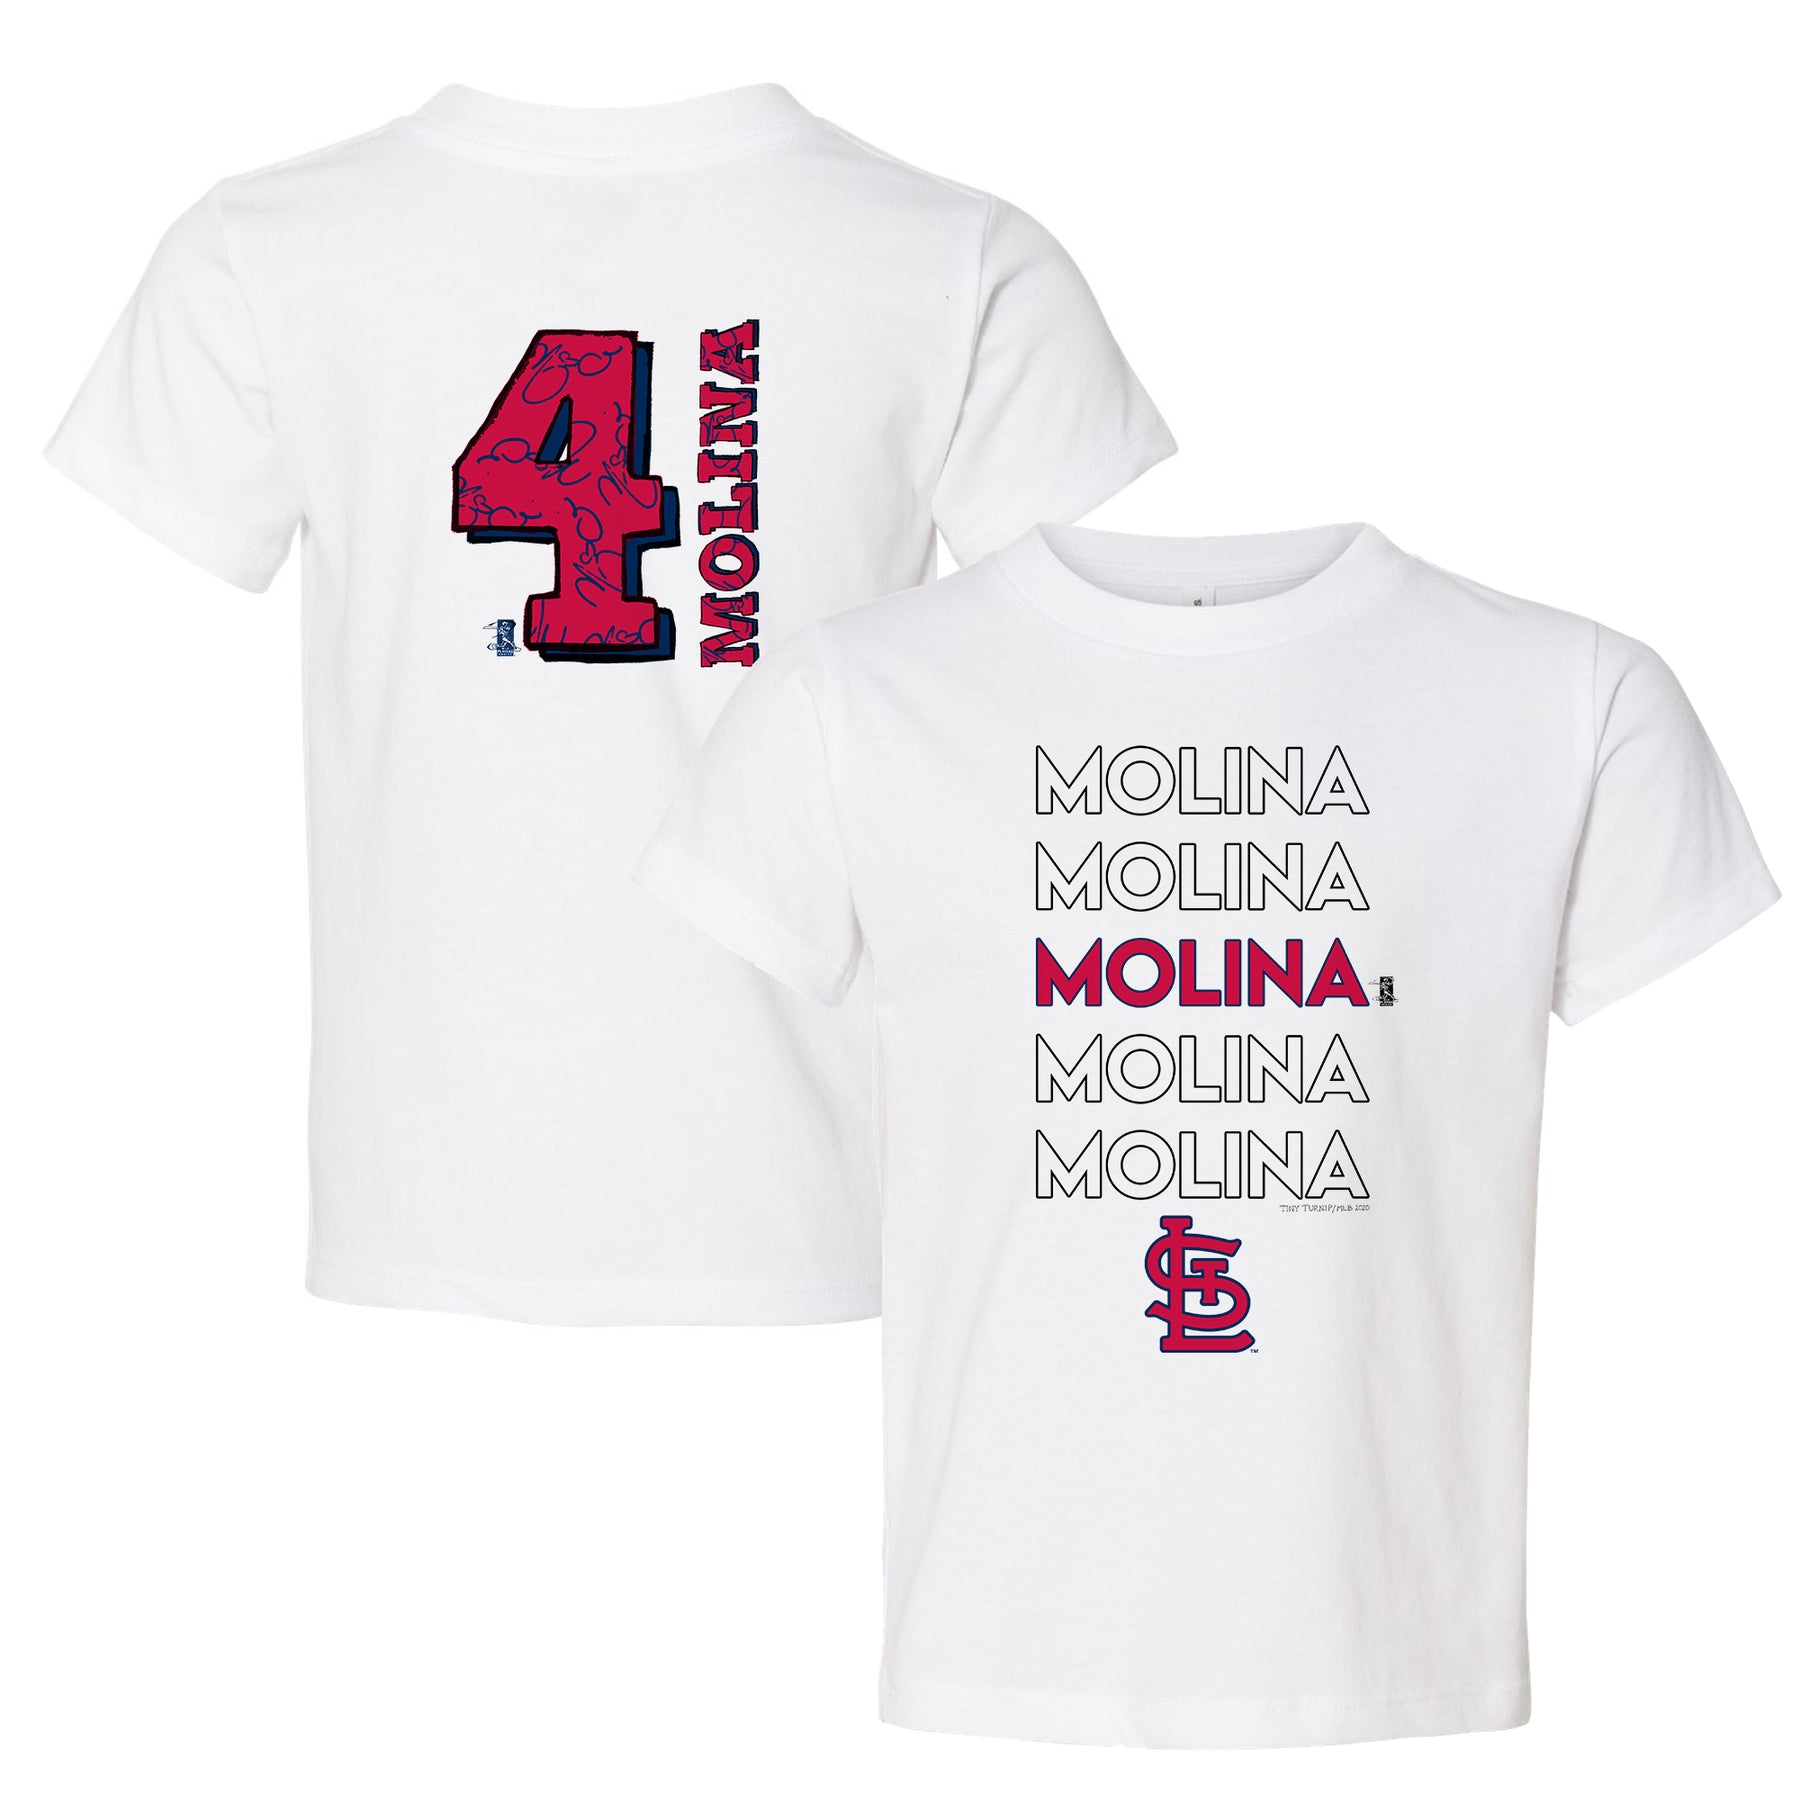 Yadier Molina MLB Kids Apparel, Kids Yadier Molina MLB Clothing,  Merchandise